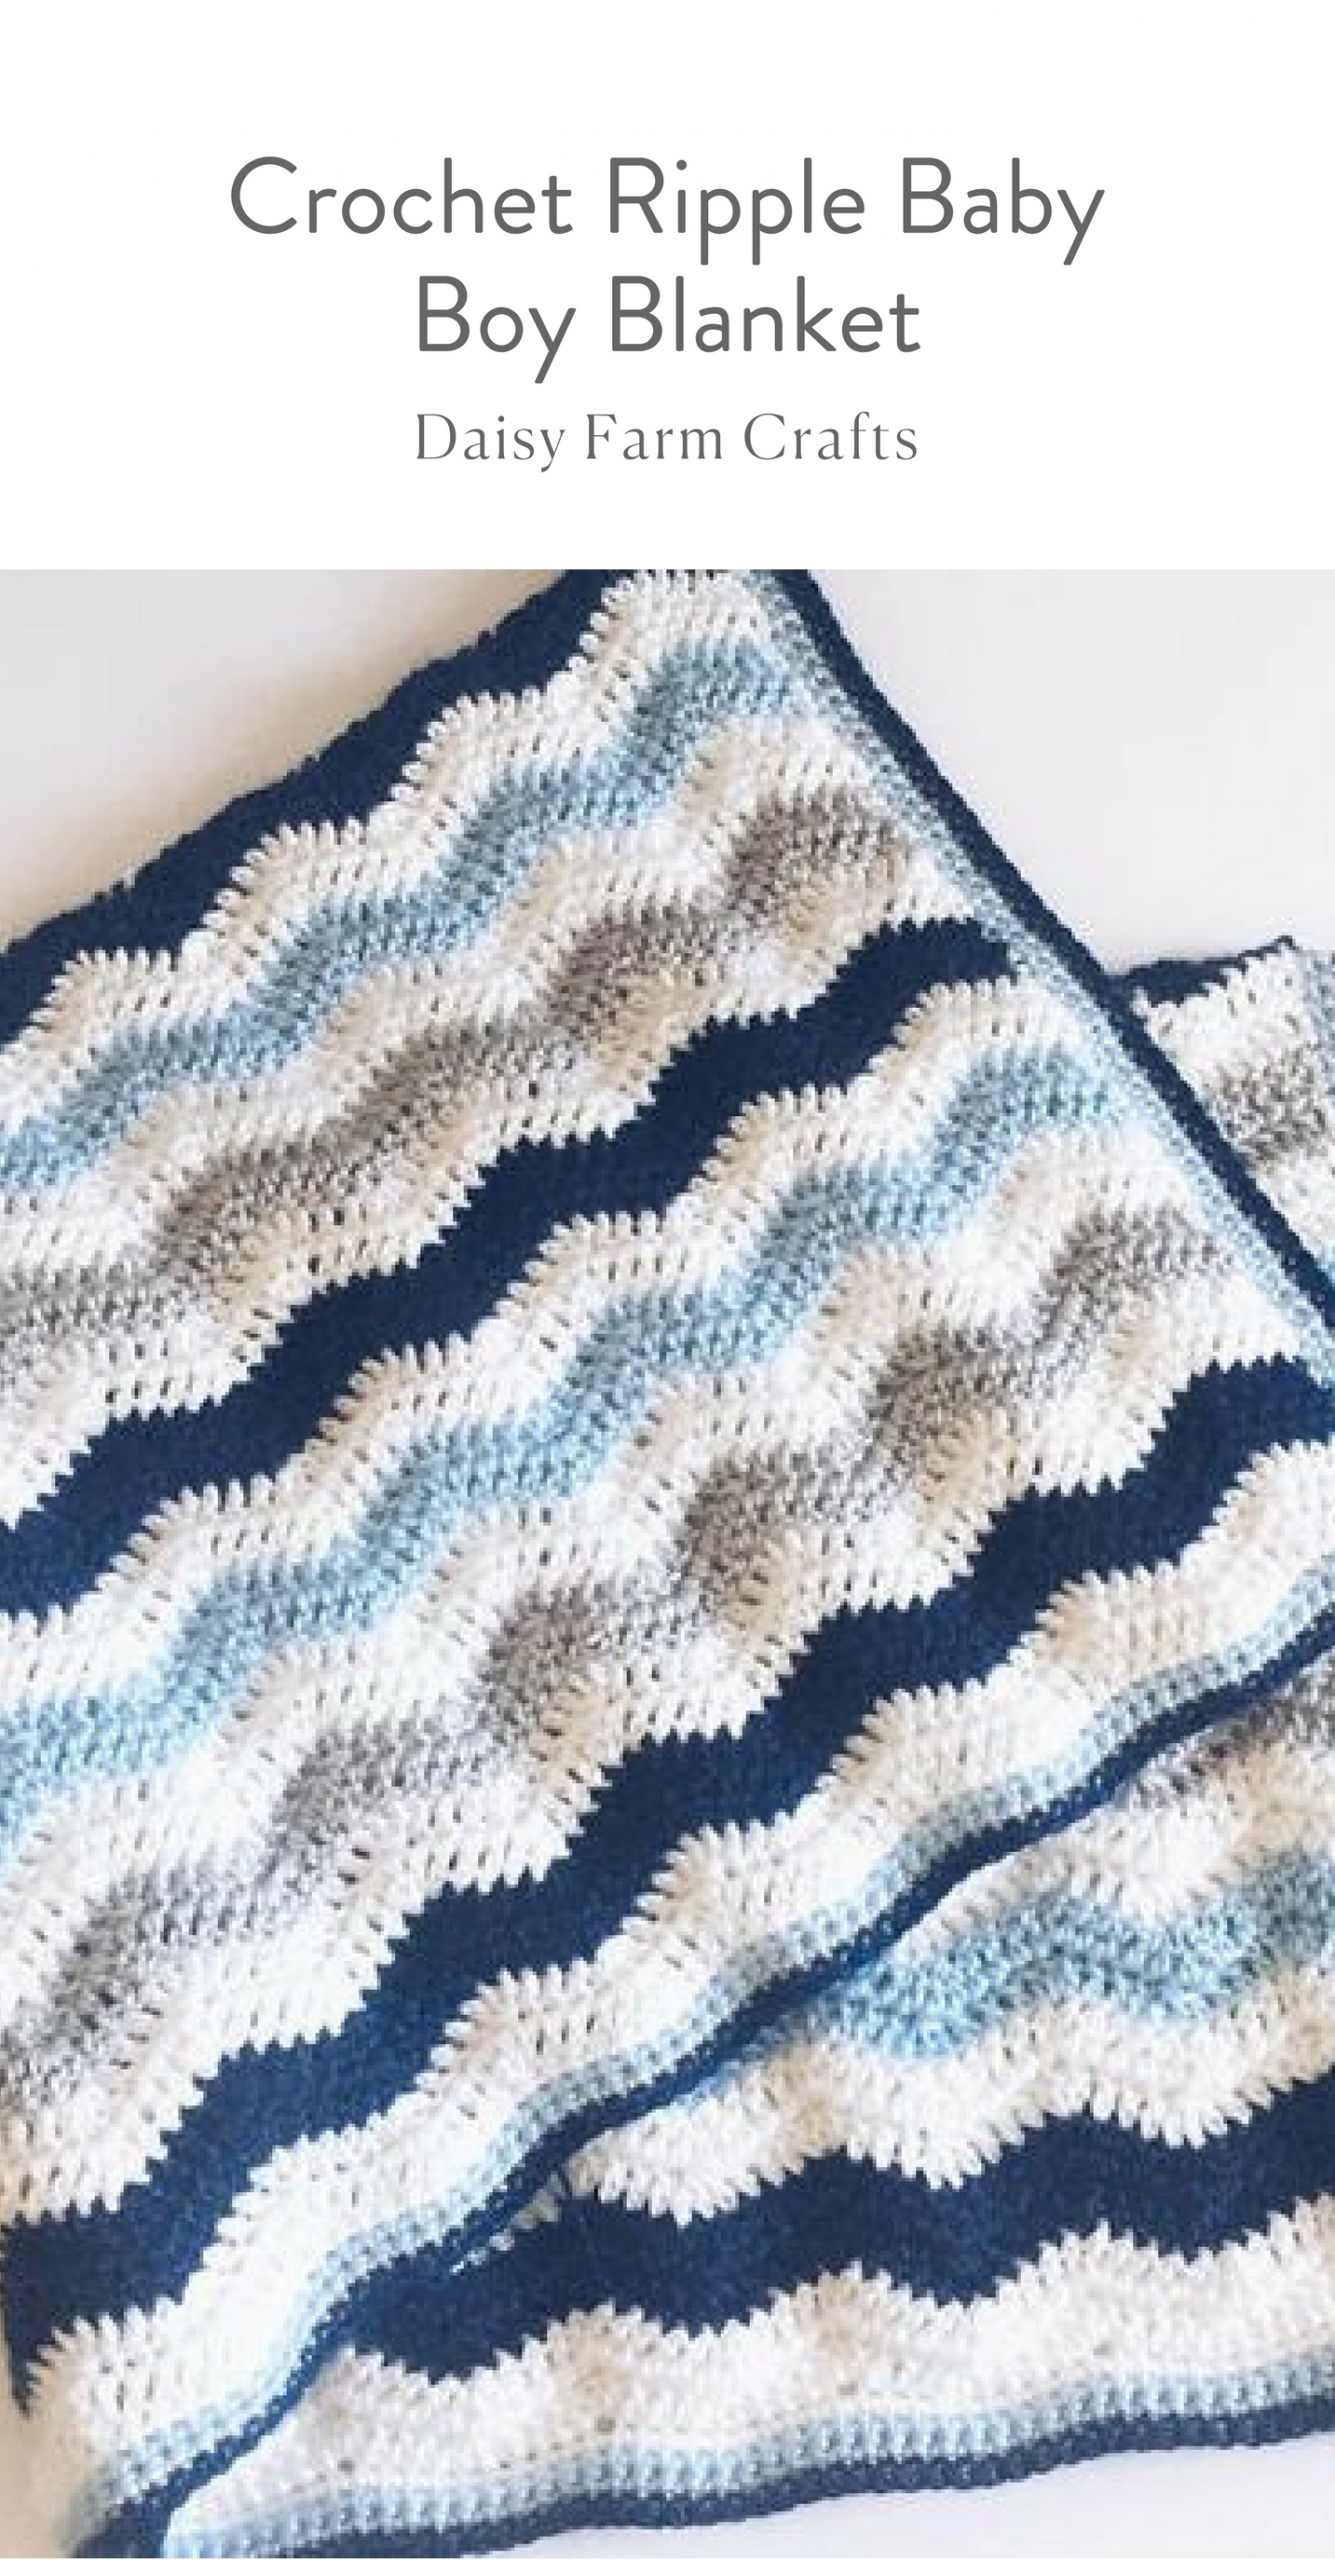 Free-Pattern-Crochet-Ripple-Baby-Boy-Blanket.png